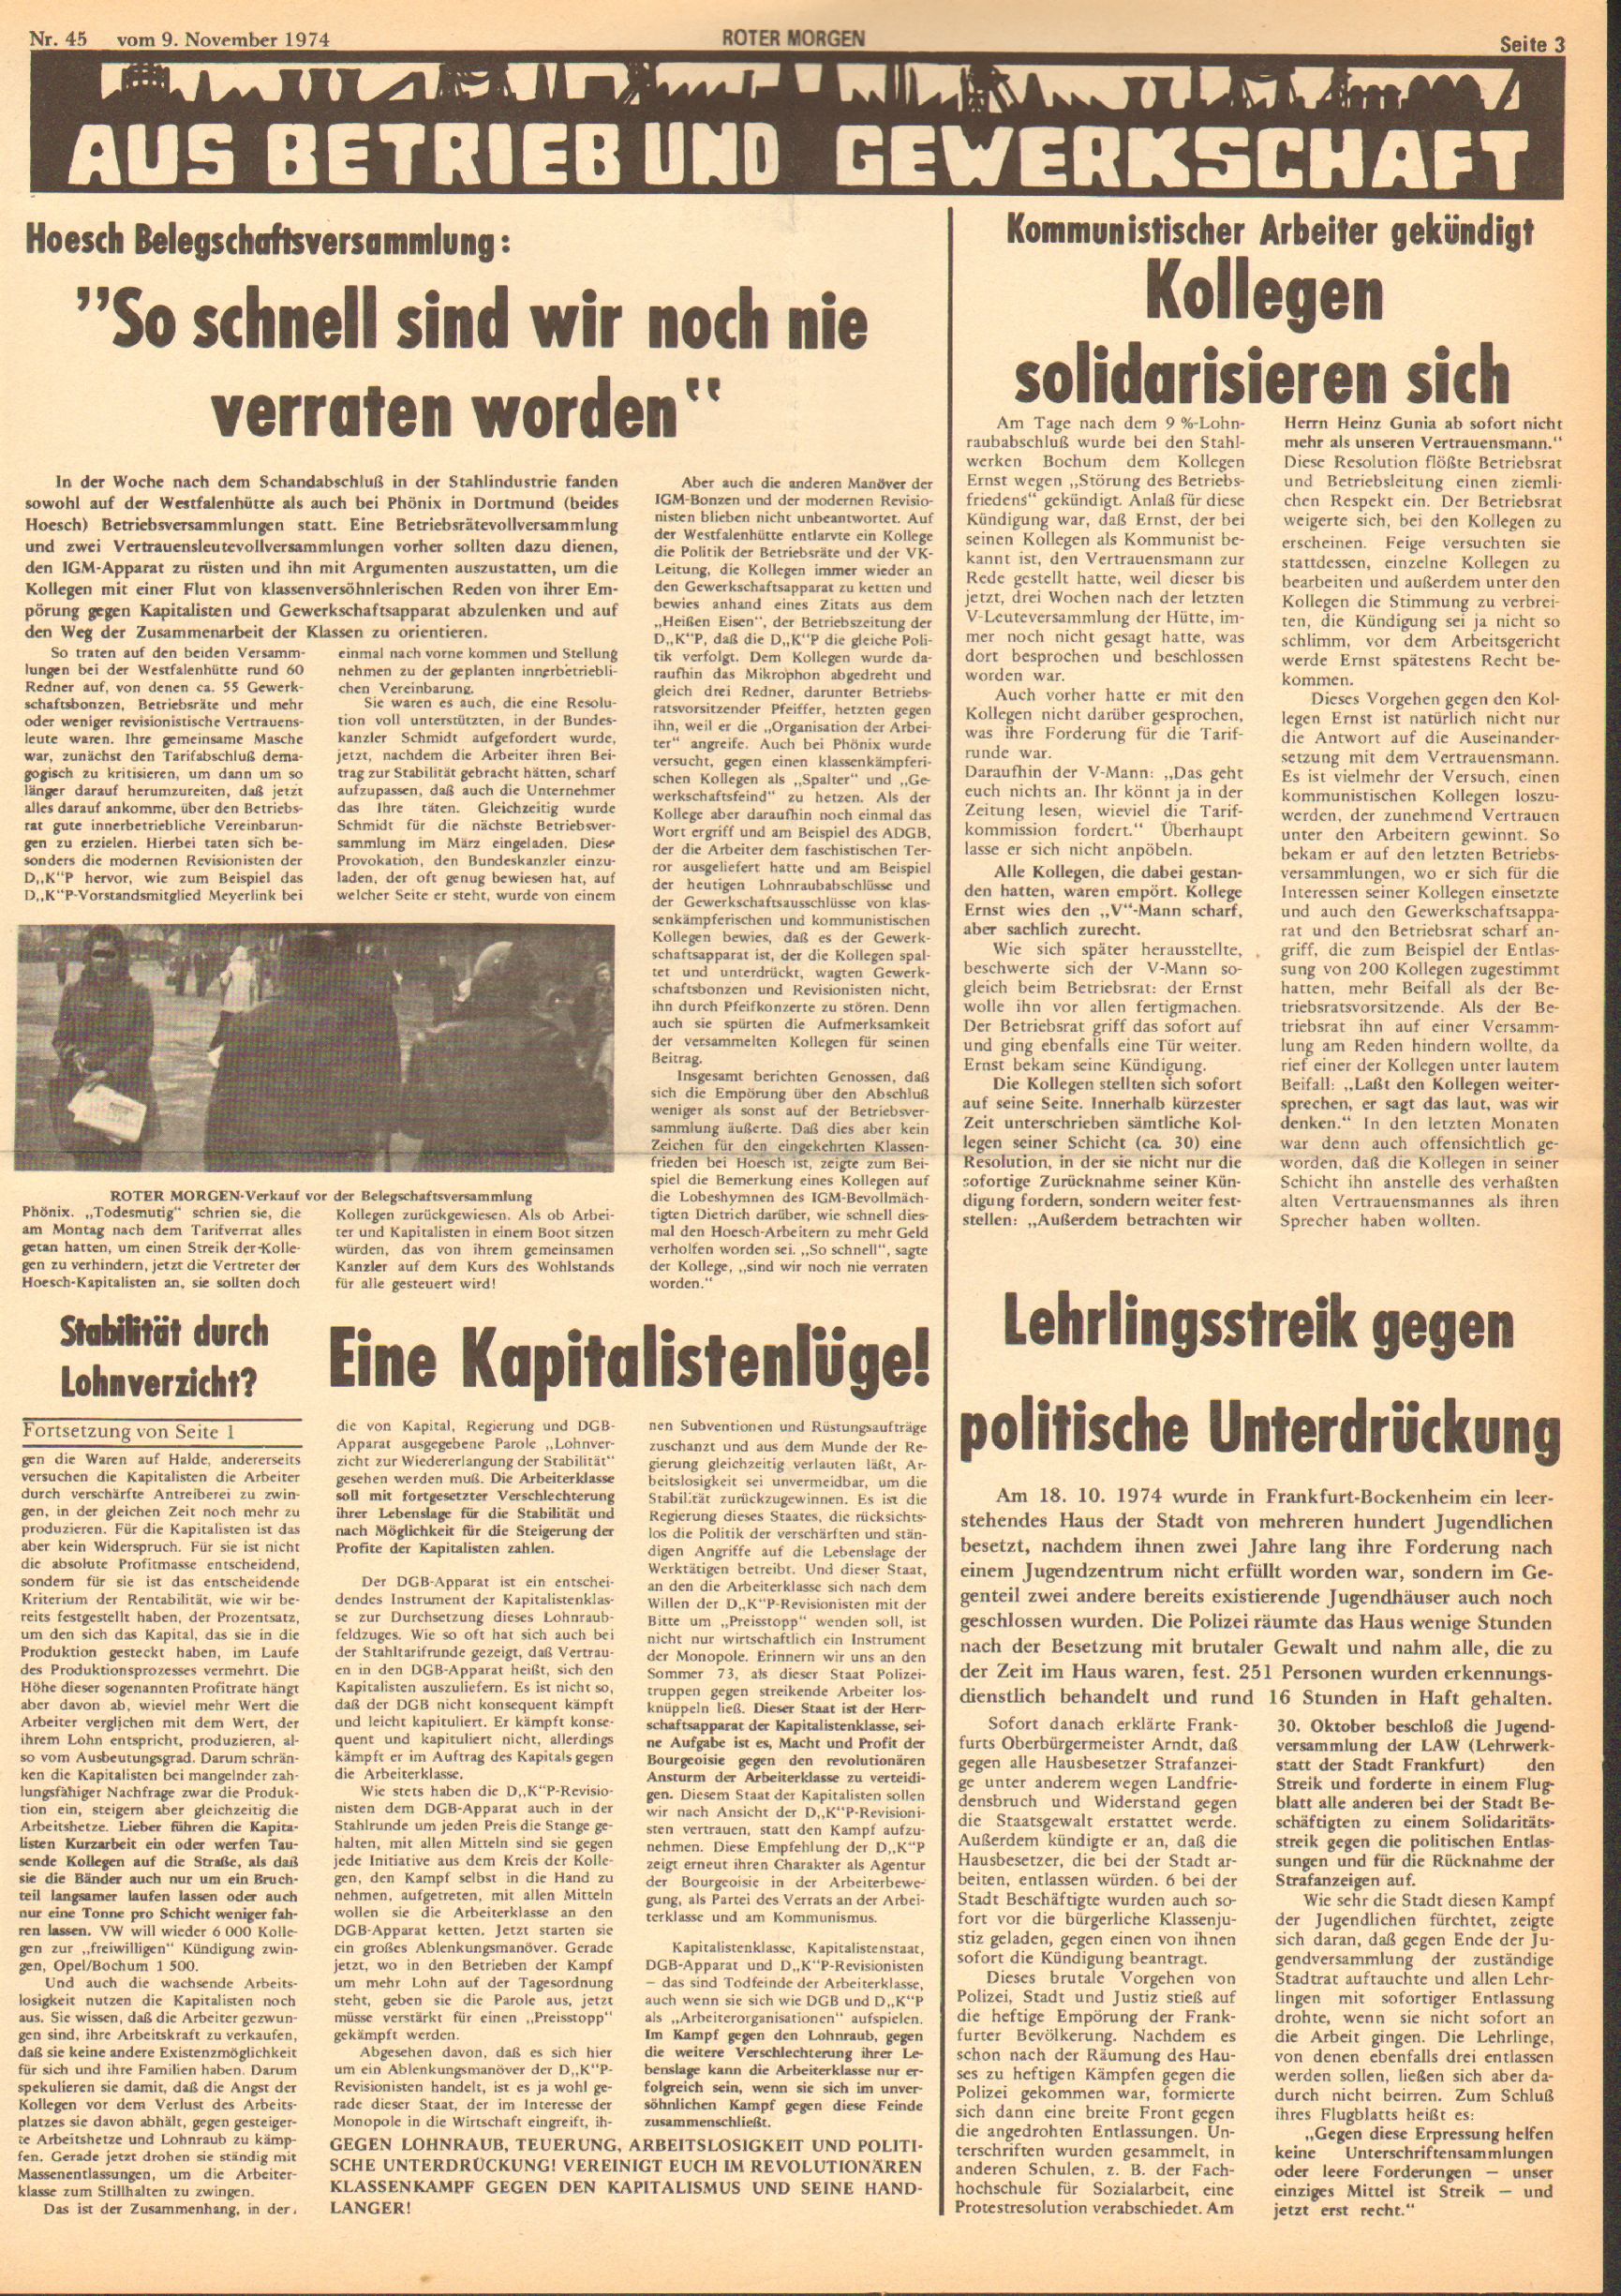 Roter Morgen, 8. Jg., 9. November 1974, Nr. 45, Seite 3